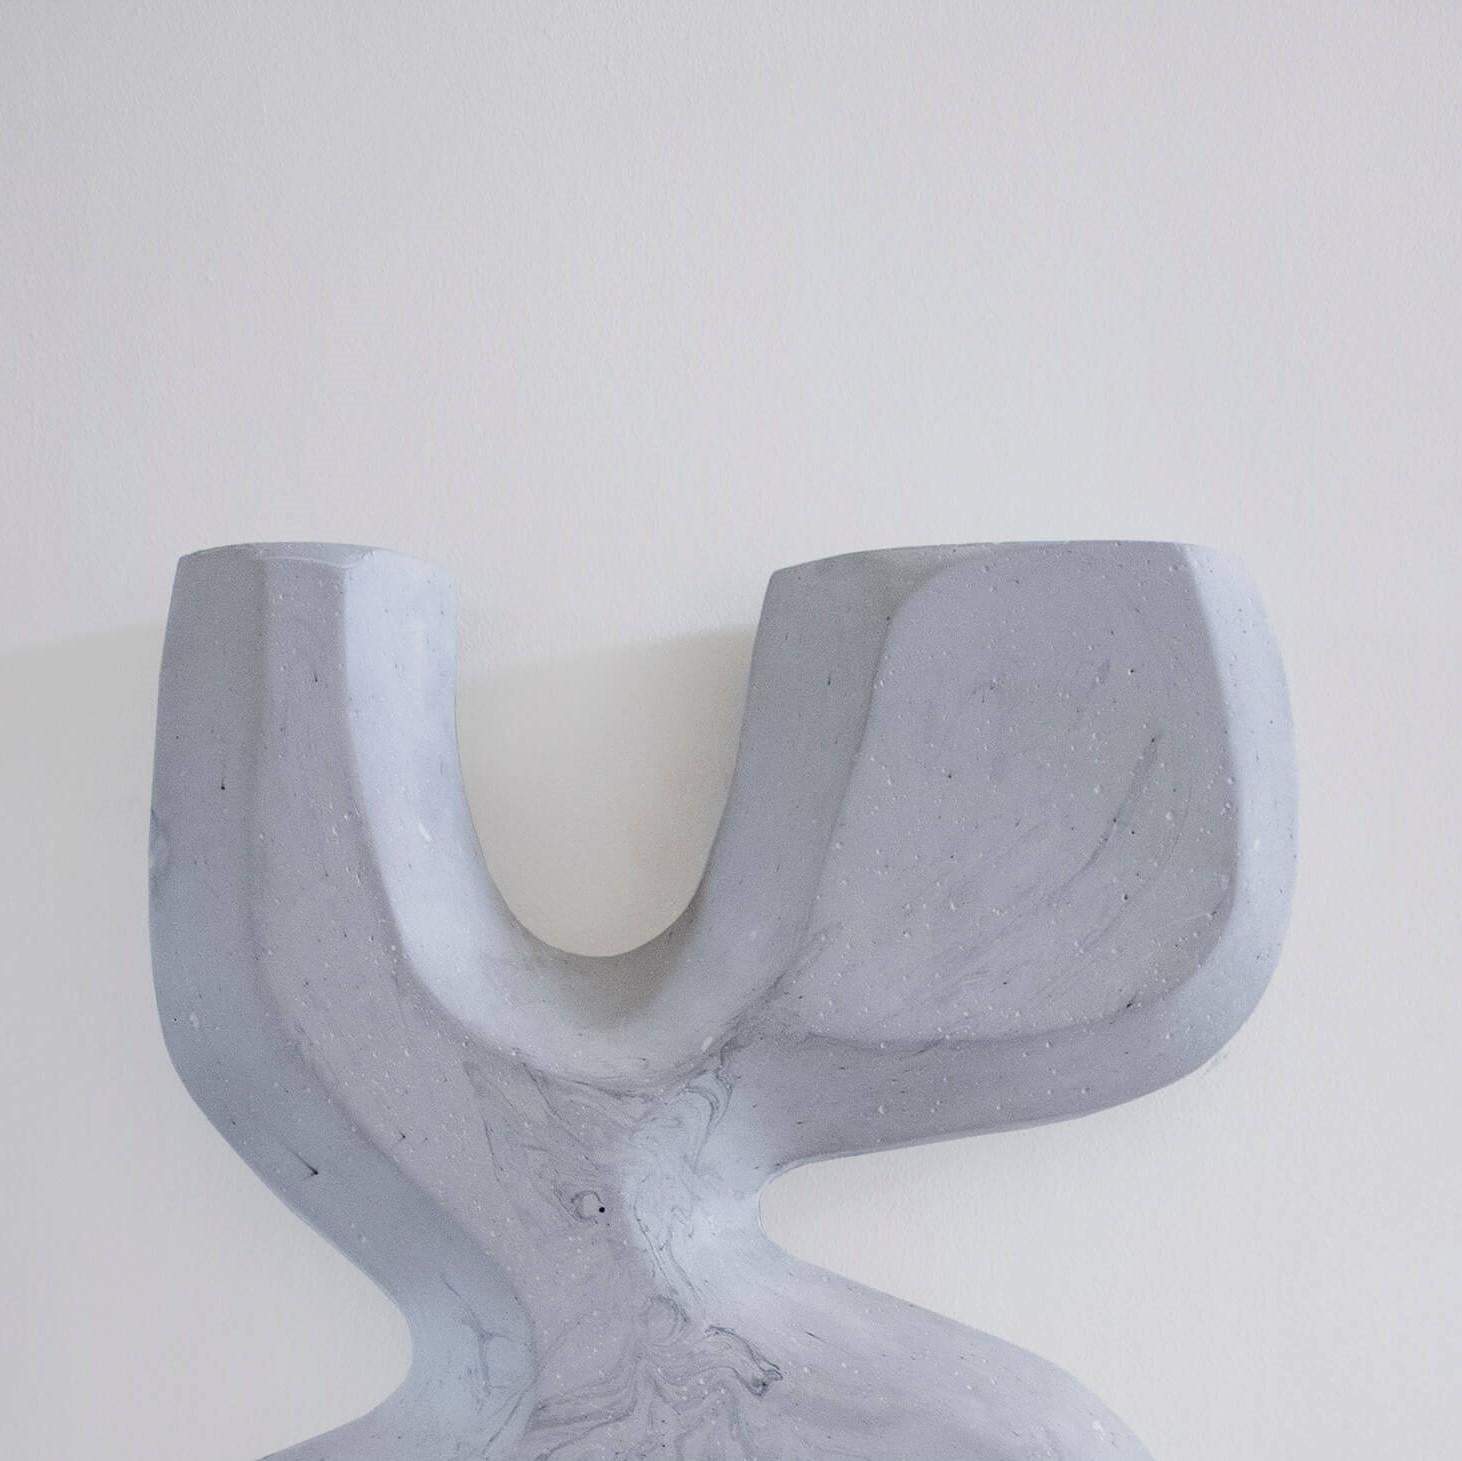 Dutch Sculpture Form No_003 by AOAO